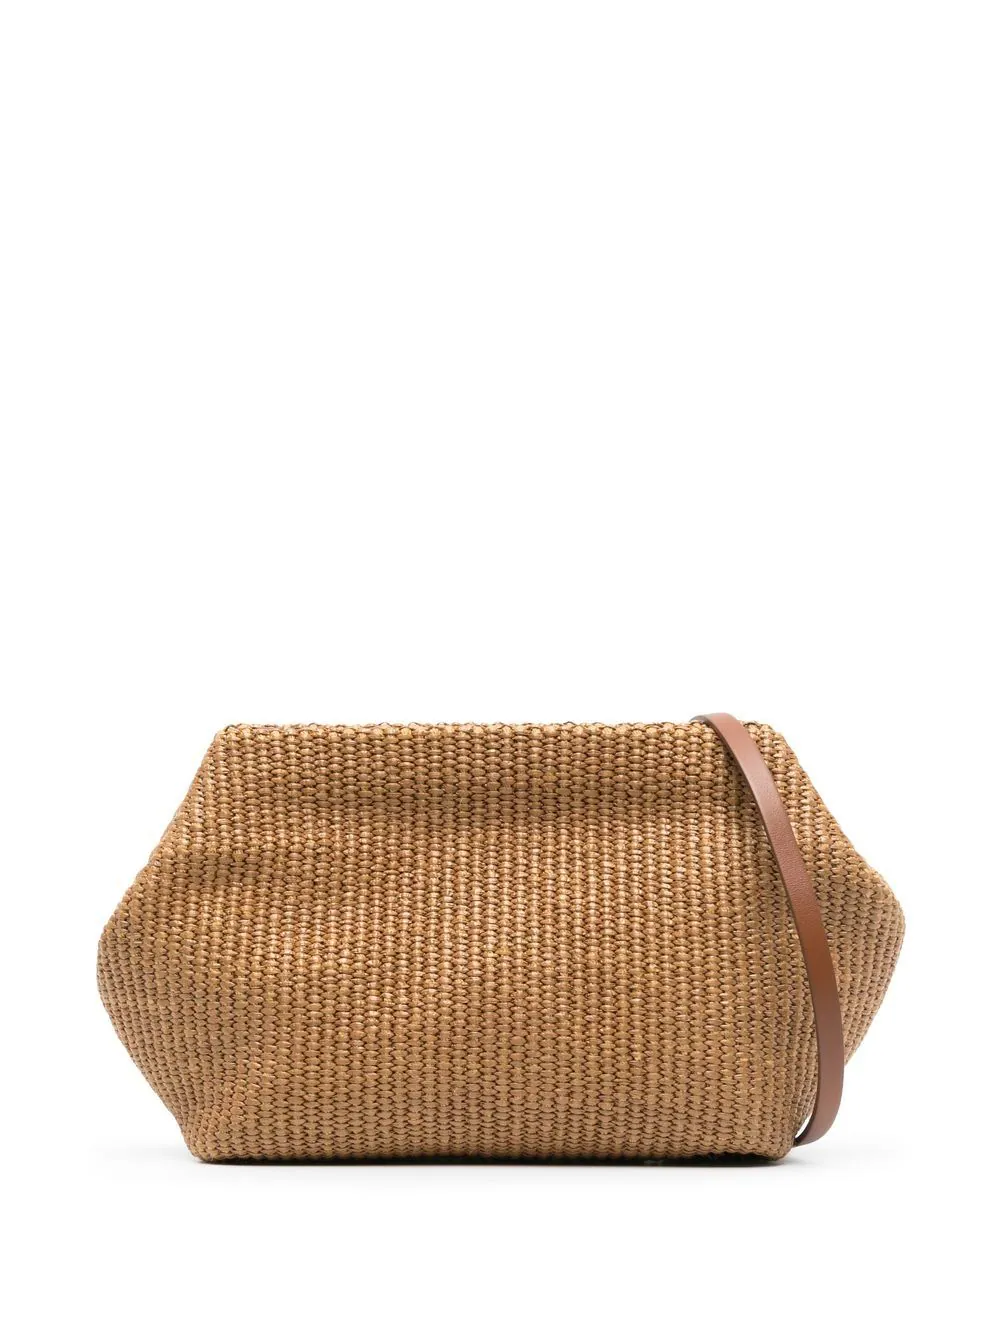 Brunello Cucinelli Raffia Clutch Bag With Strap In Brown